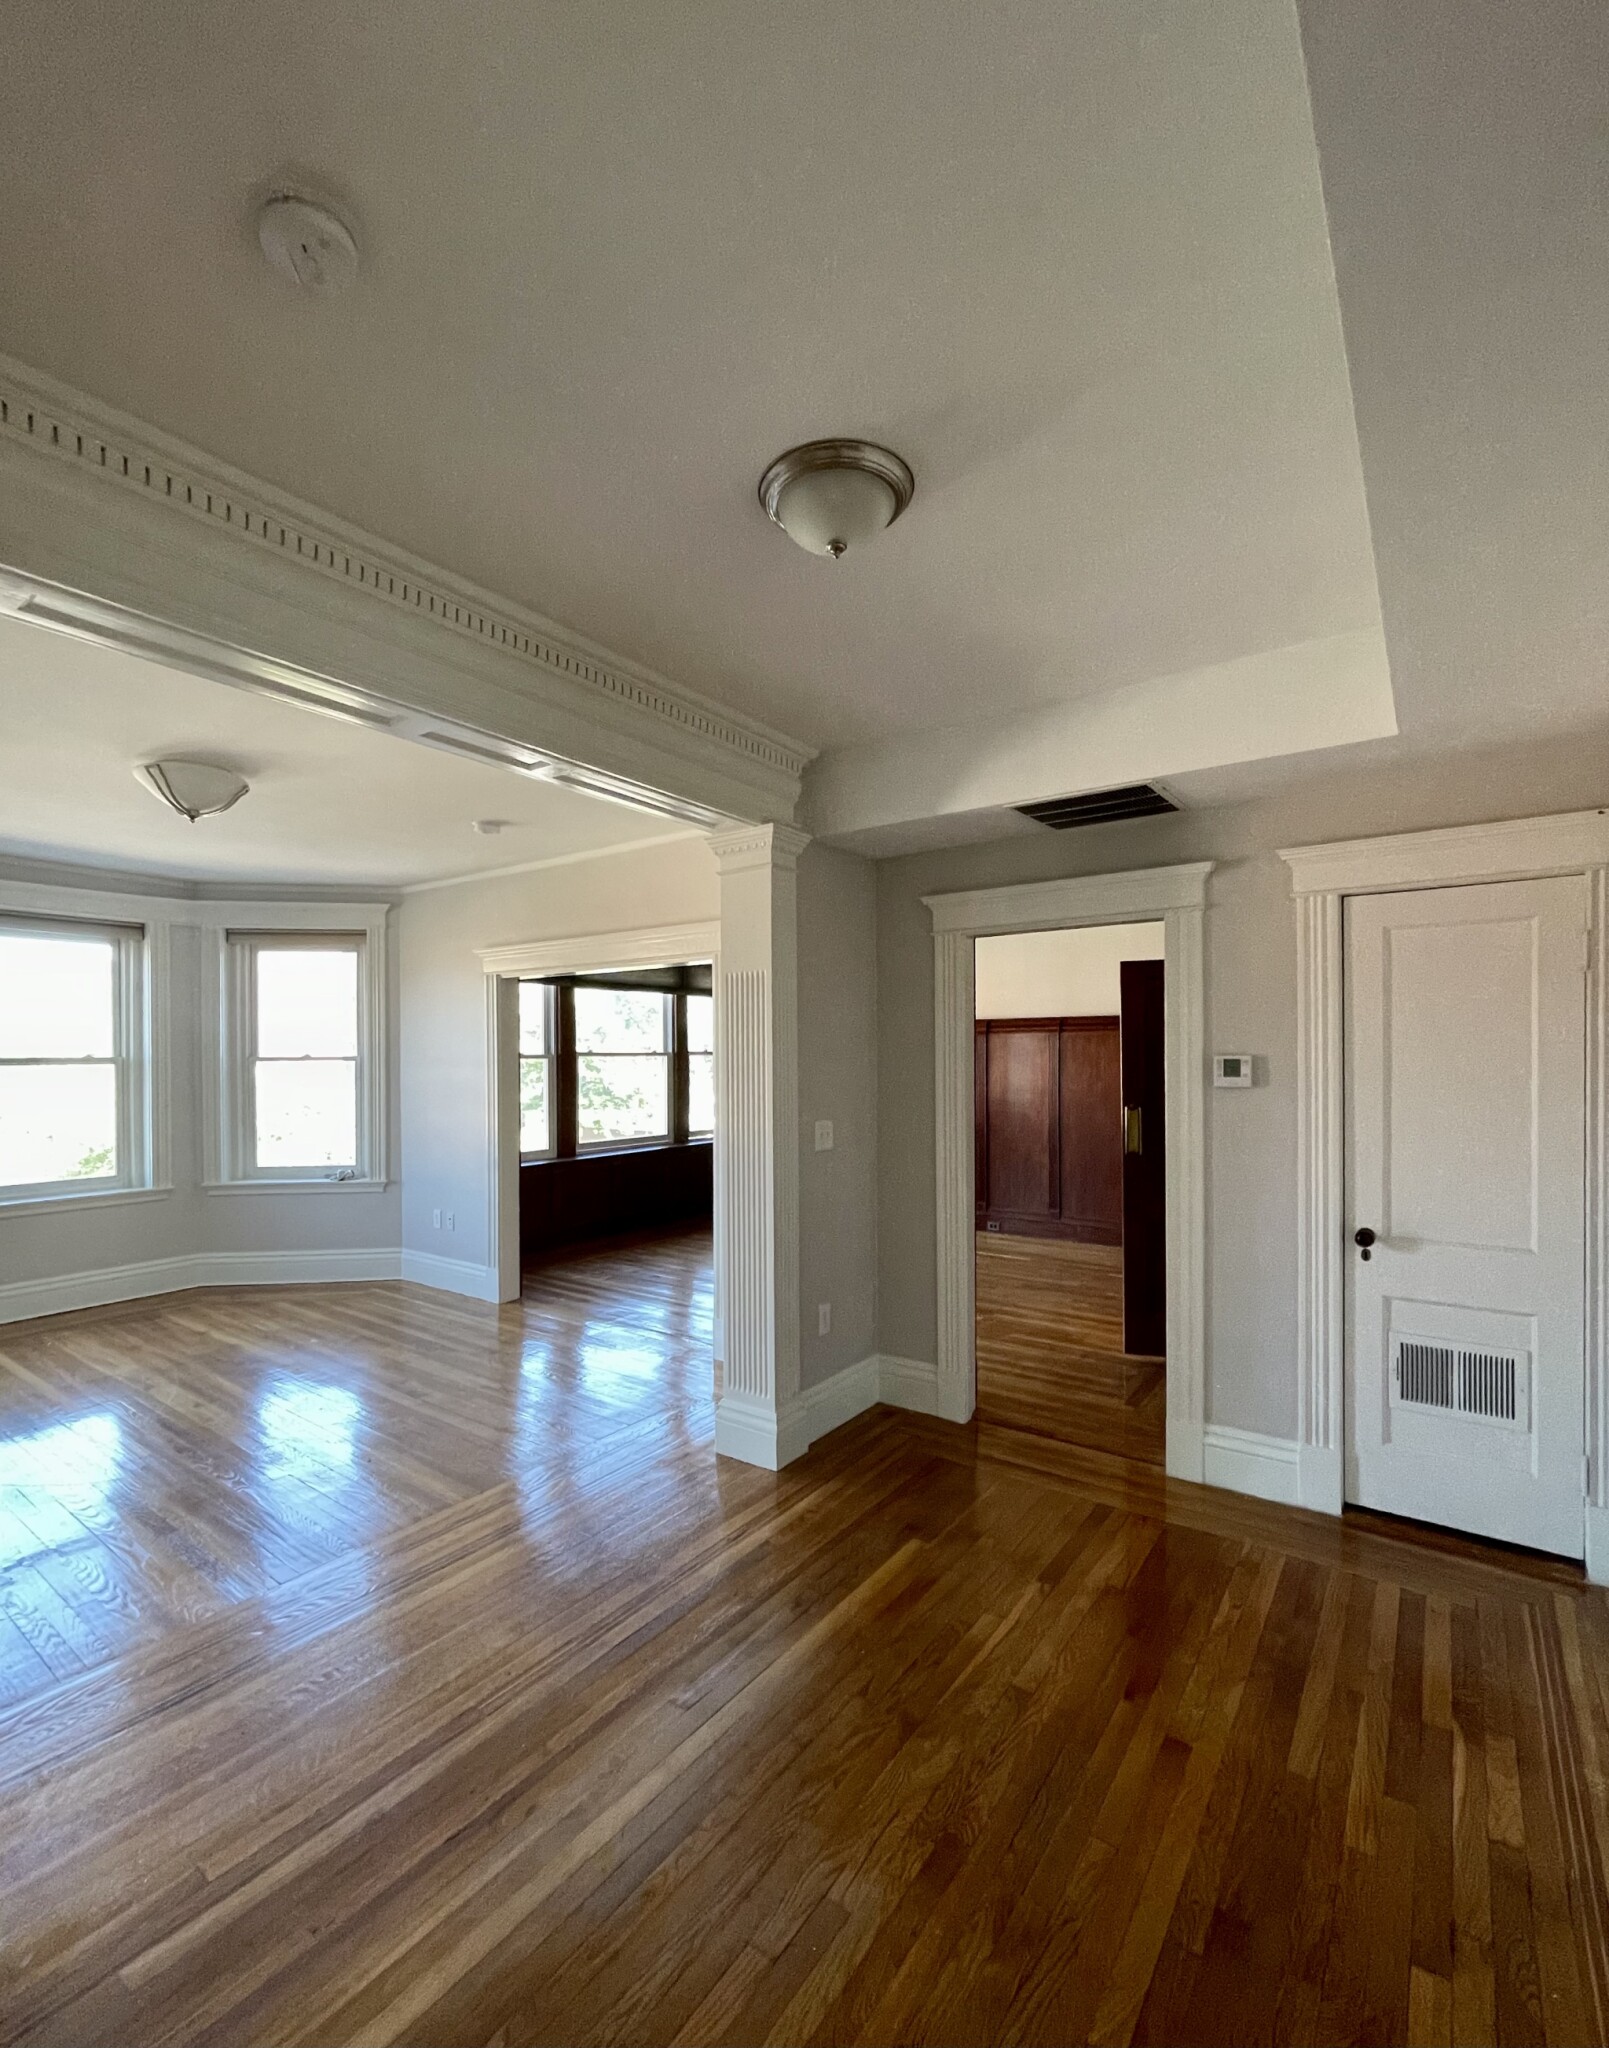 Photos of apartment on Harvard,Brookline MA 02446